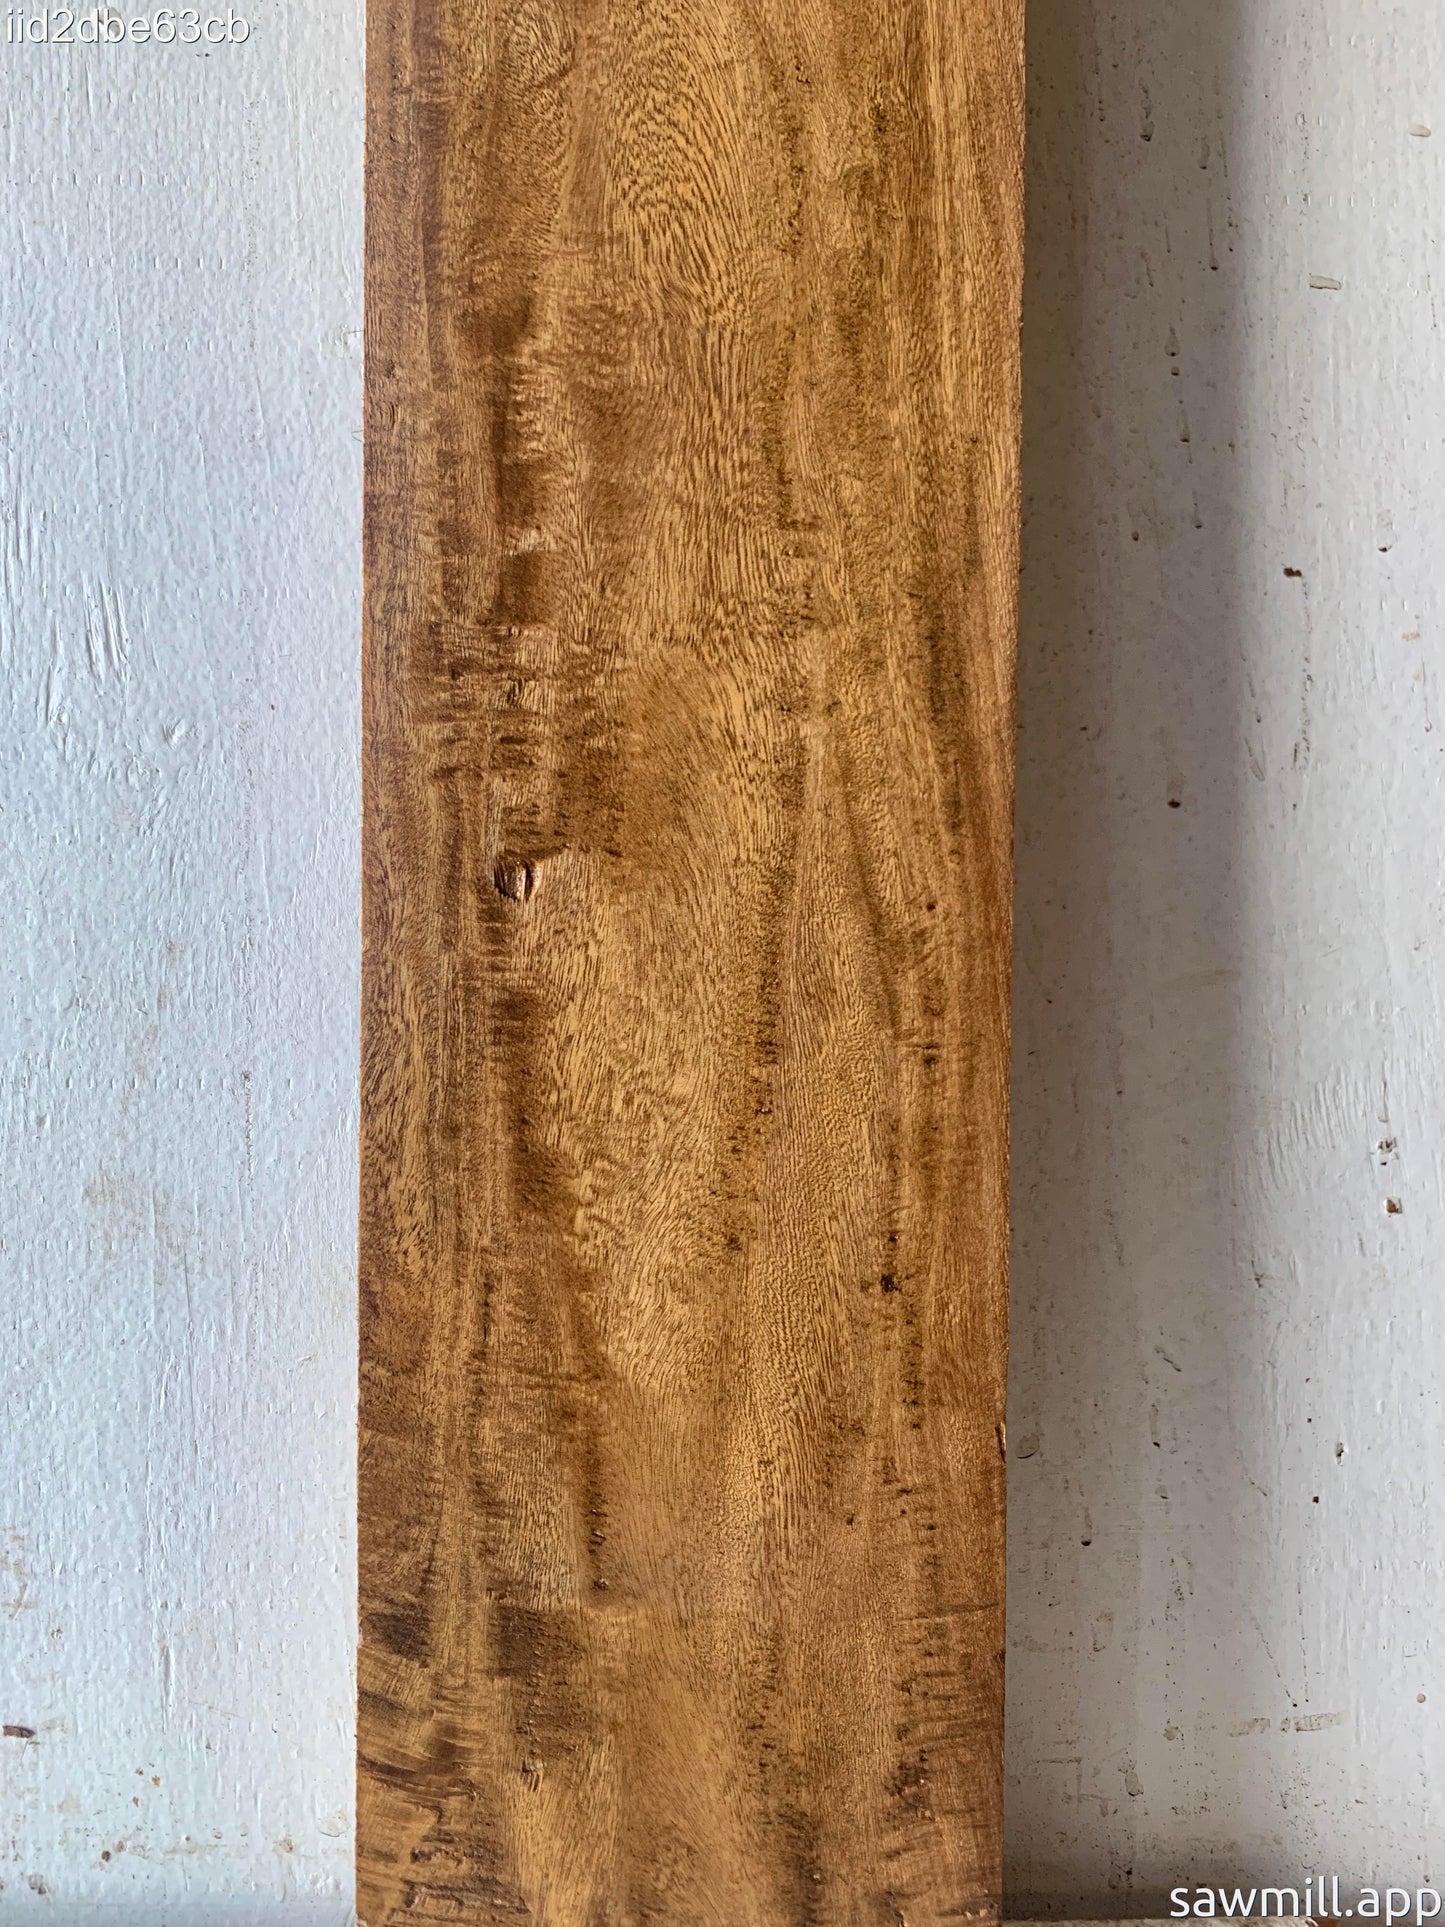 1.5" x 4" x 37" Fiddle Wood